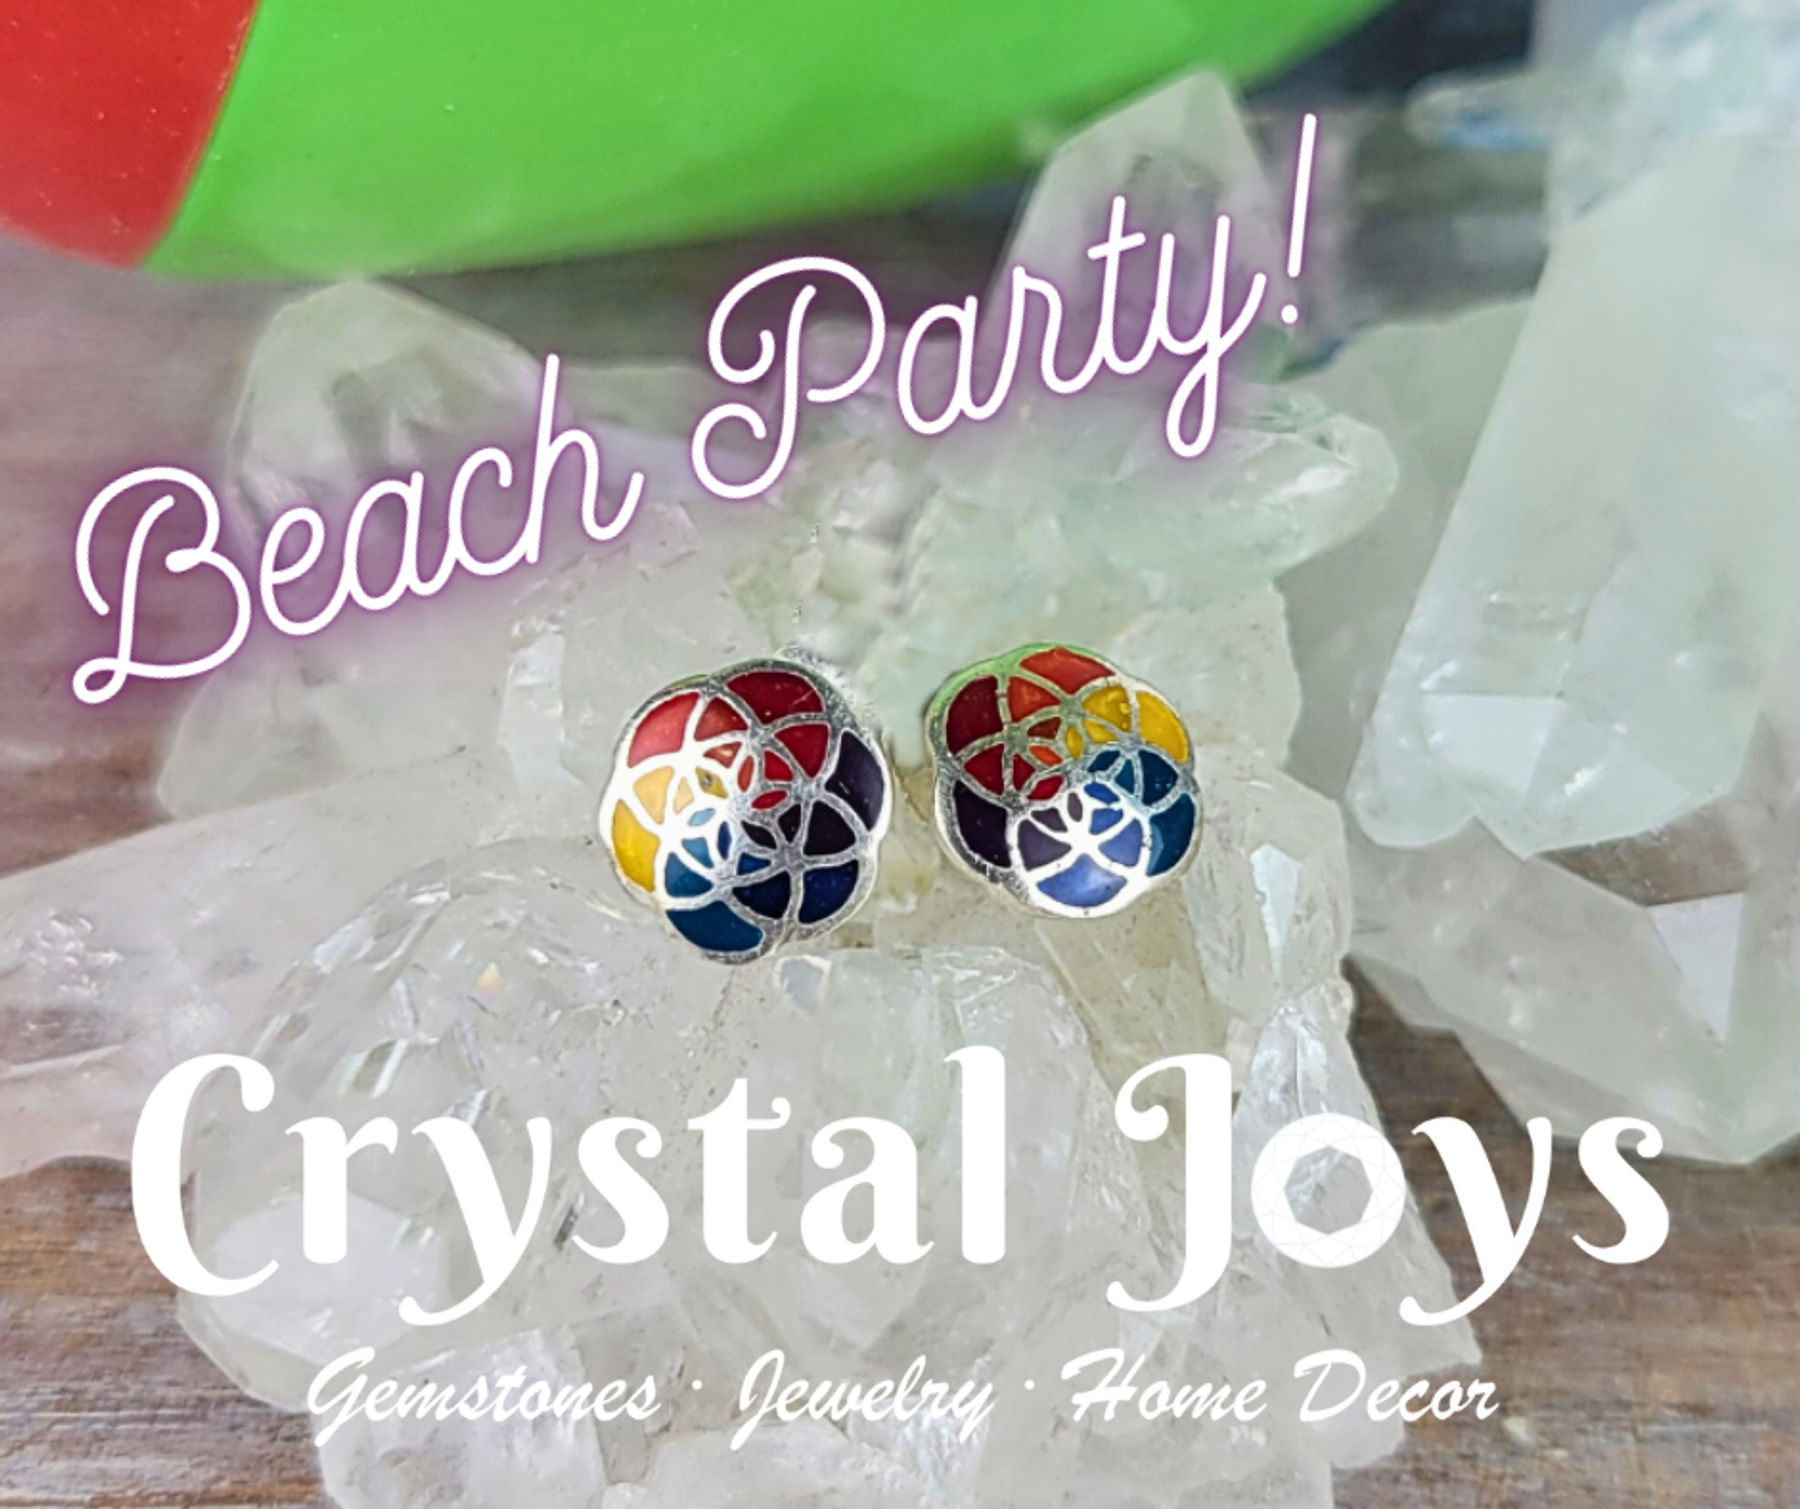 Beach Party - Deals at Crystal Joys!